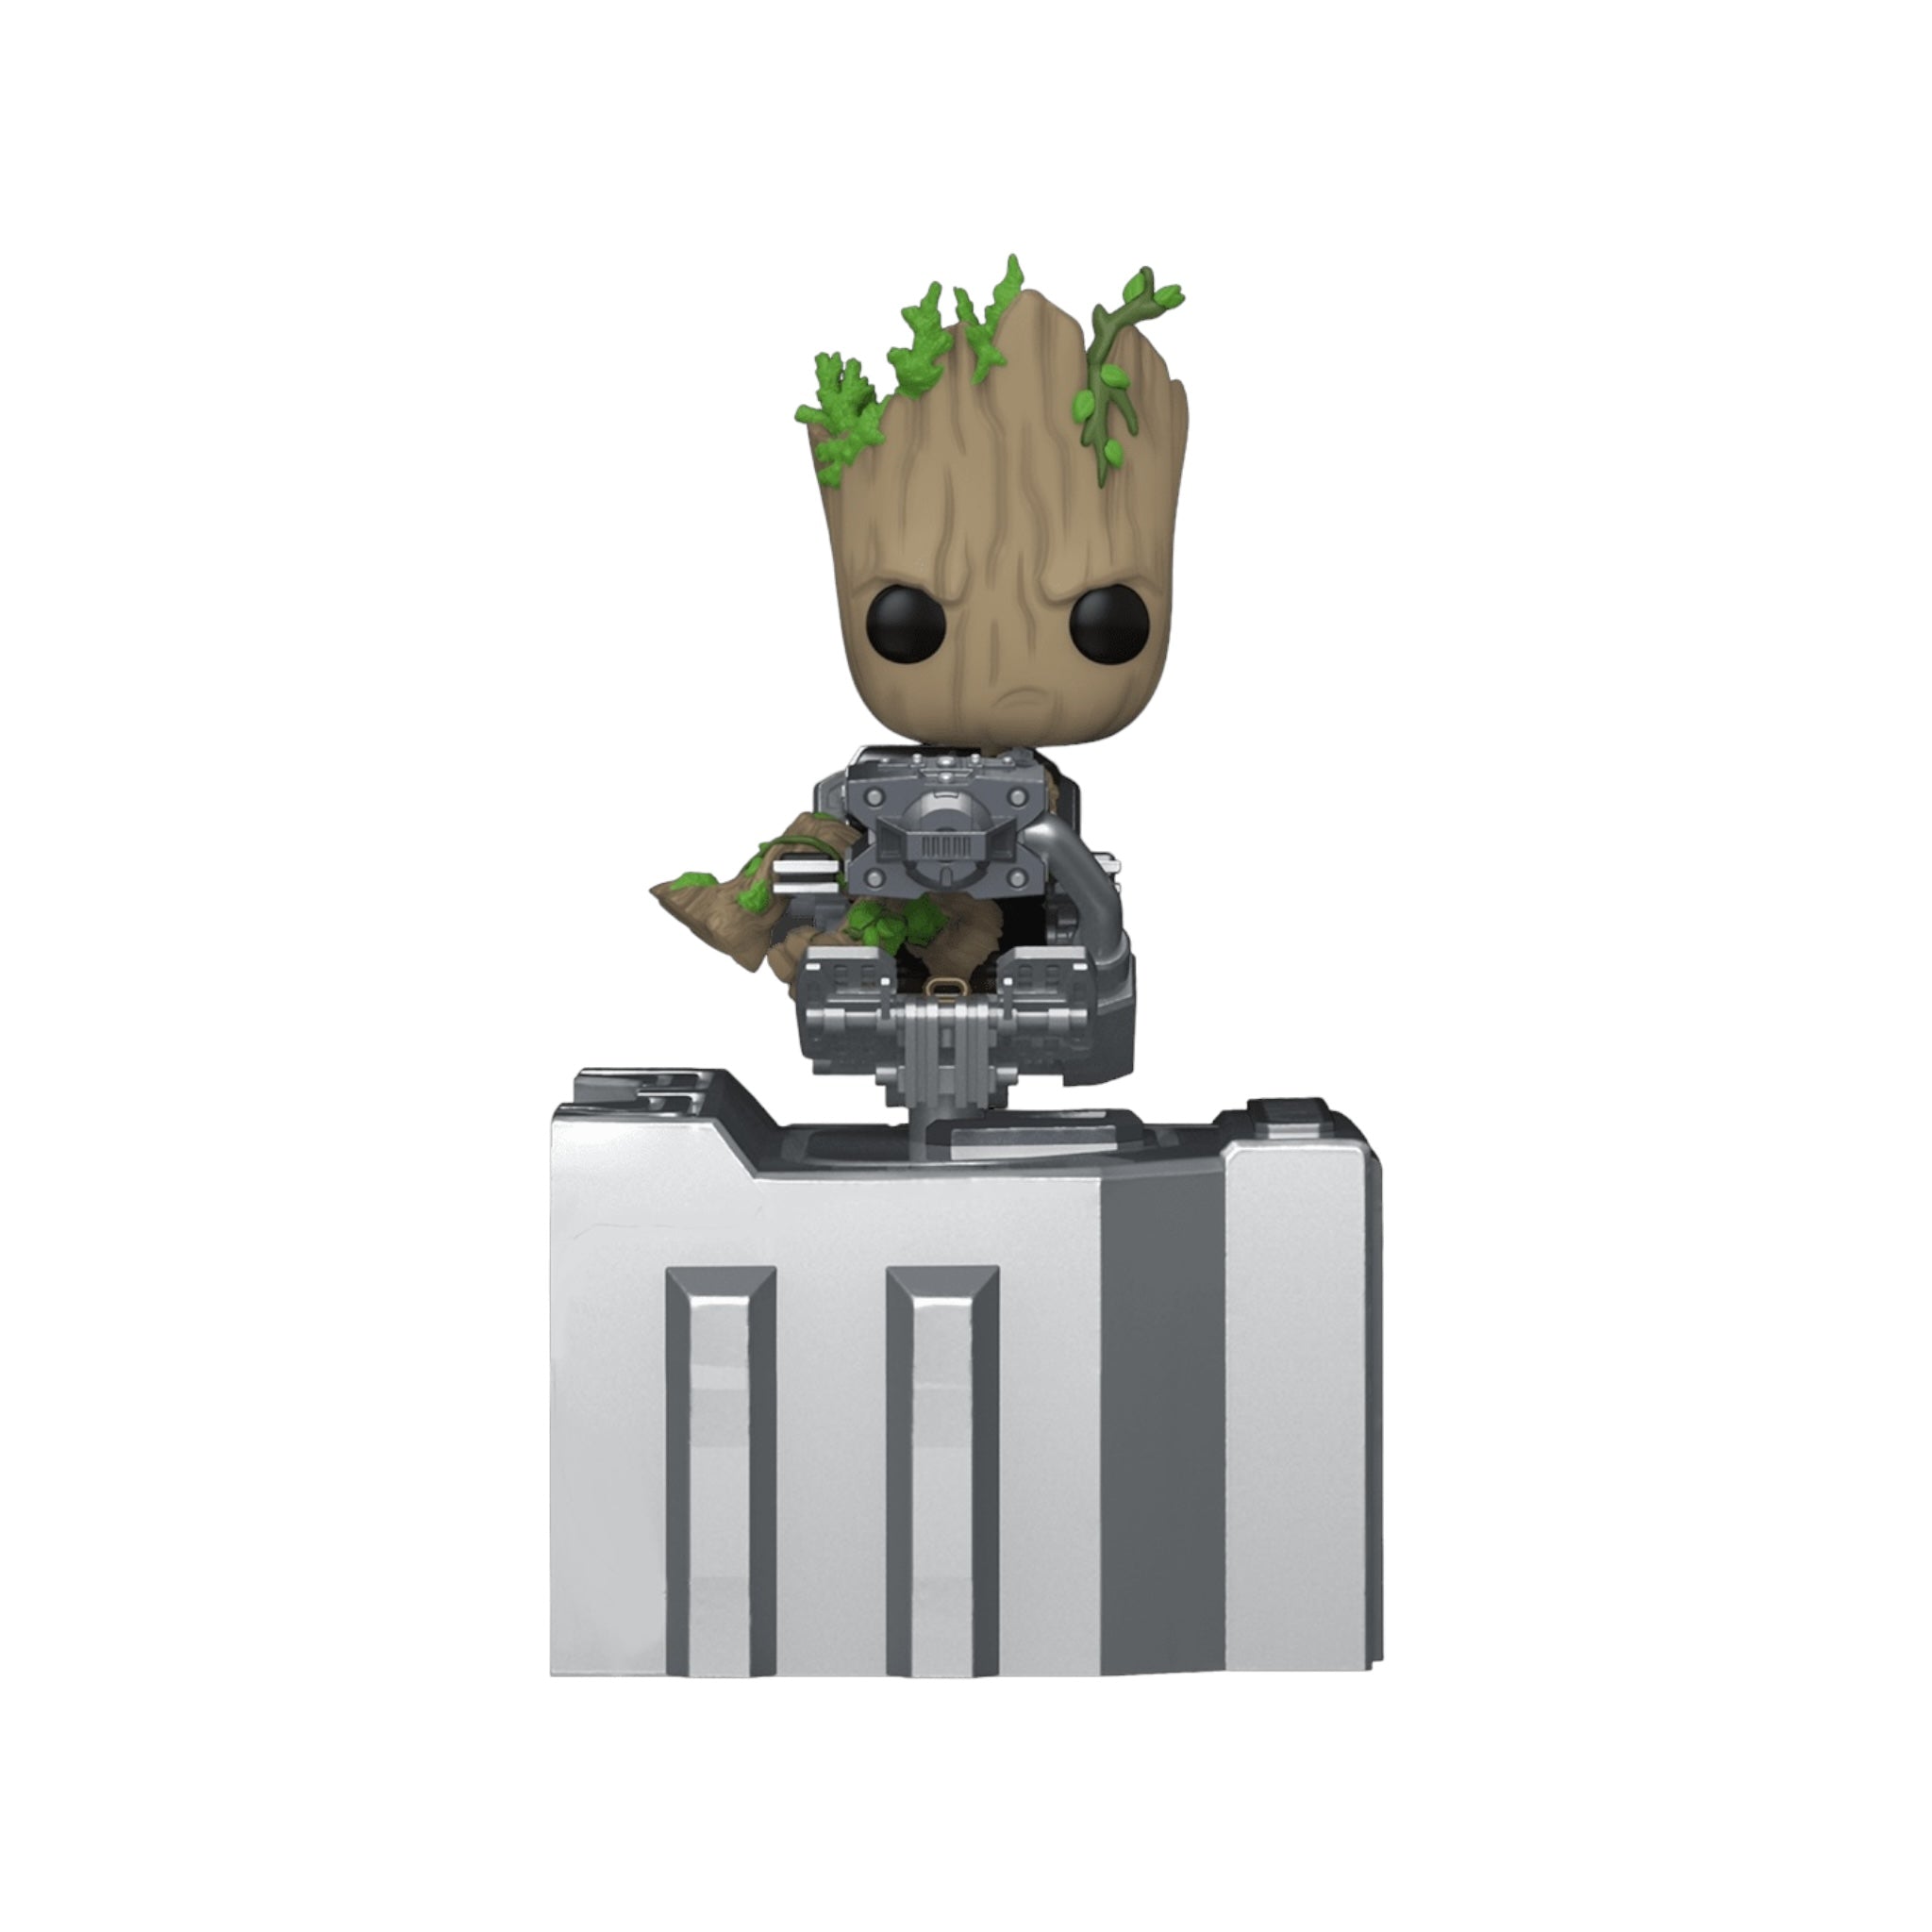 Guardians' Ship: Groot #1026 Deluxe Funko Pop! - Avengers: Infinity War - Special Edition